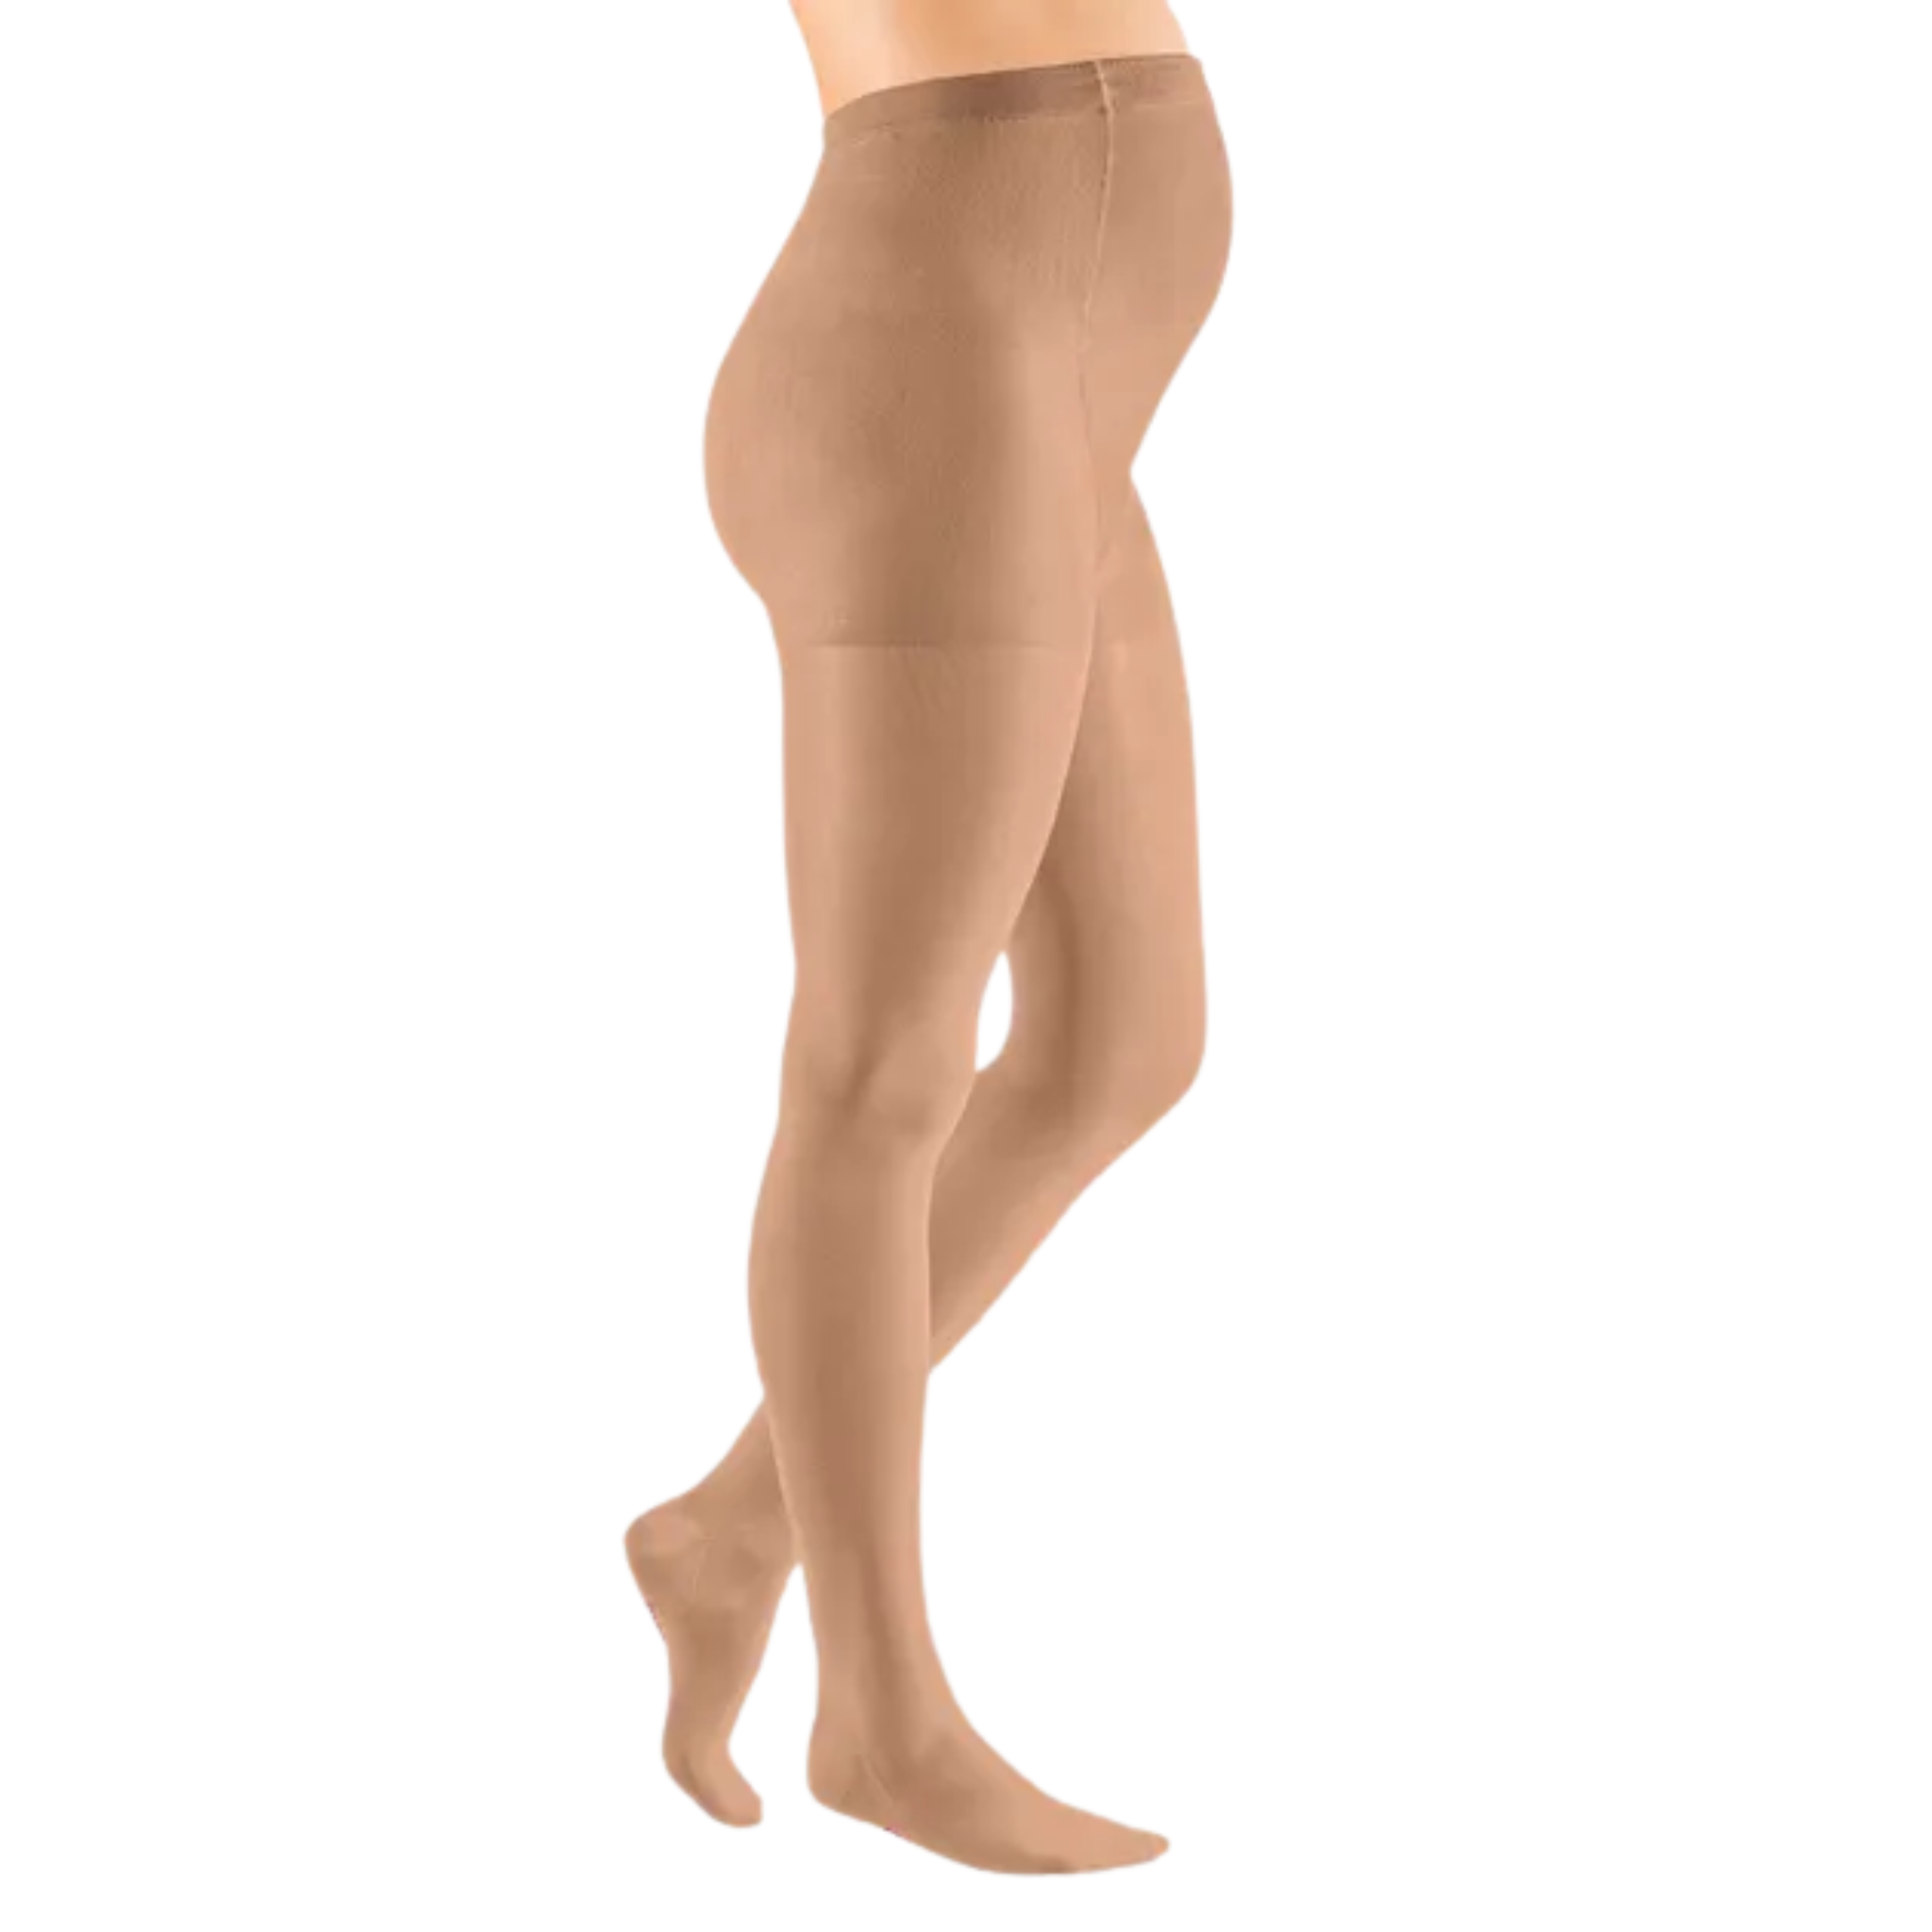 Compression Stockings  Maternity Pantyhose  Closed Toe  Caramel  mediven elegance®